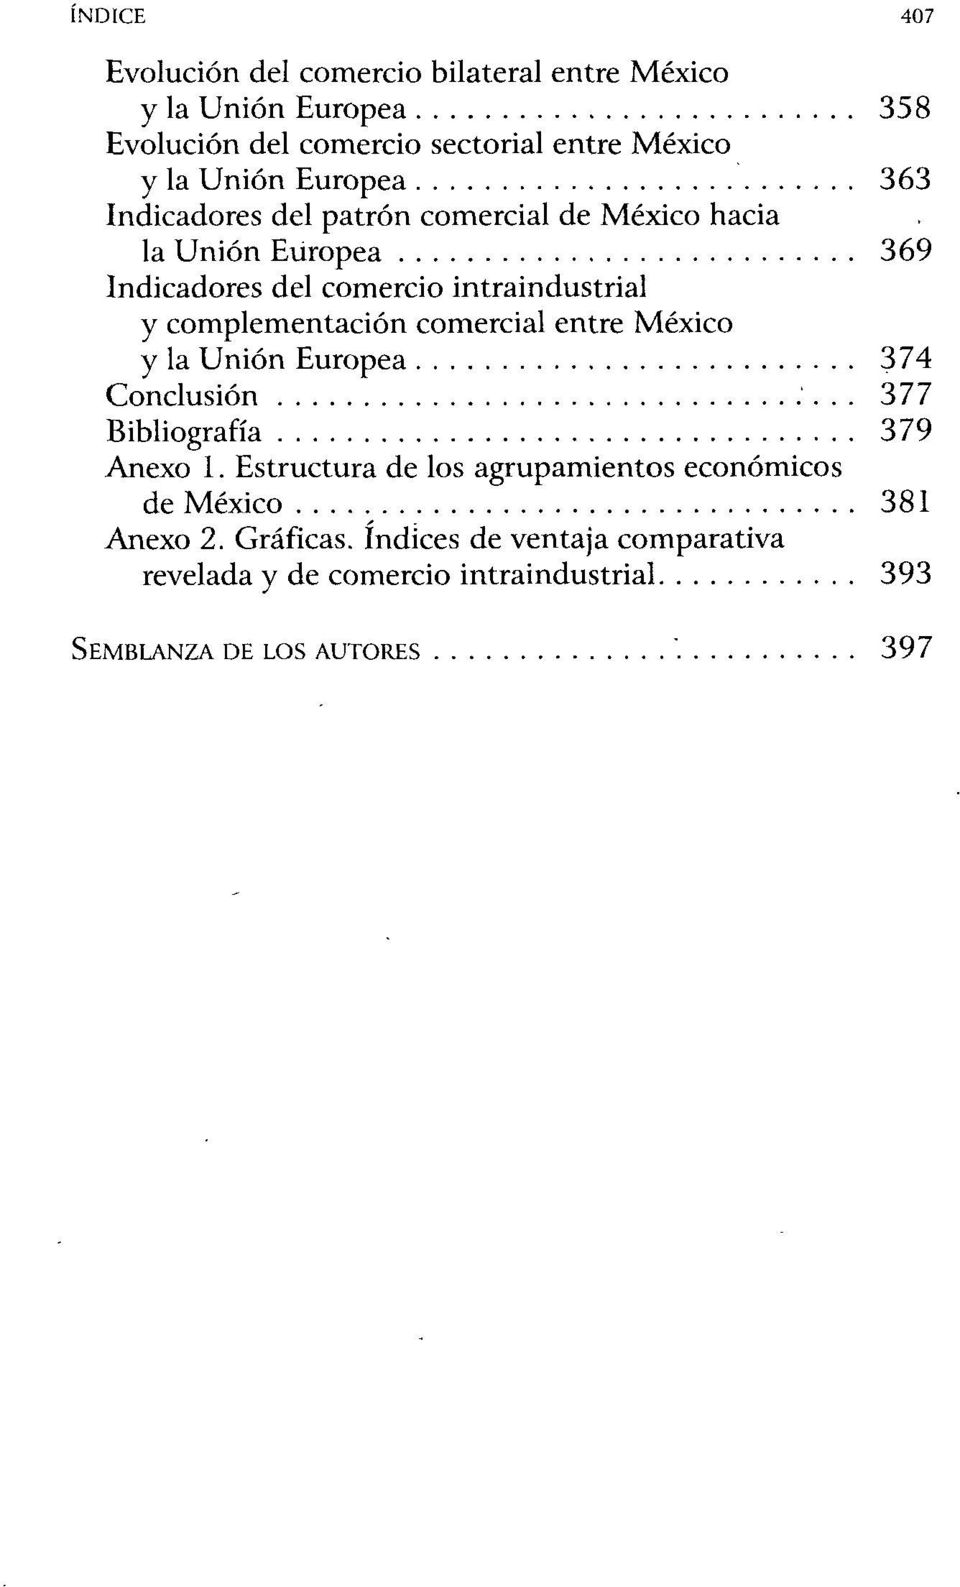 complementación comercial entre México y la Unión Europea 374 Conclusión 377 Bibliografía 379 Anexo 1.